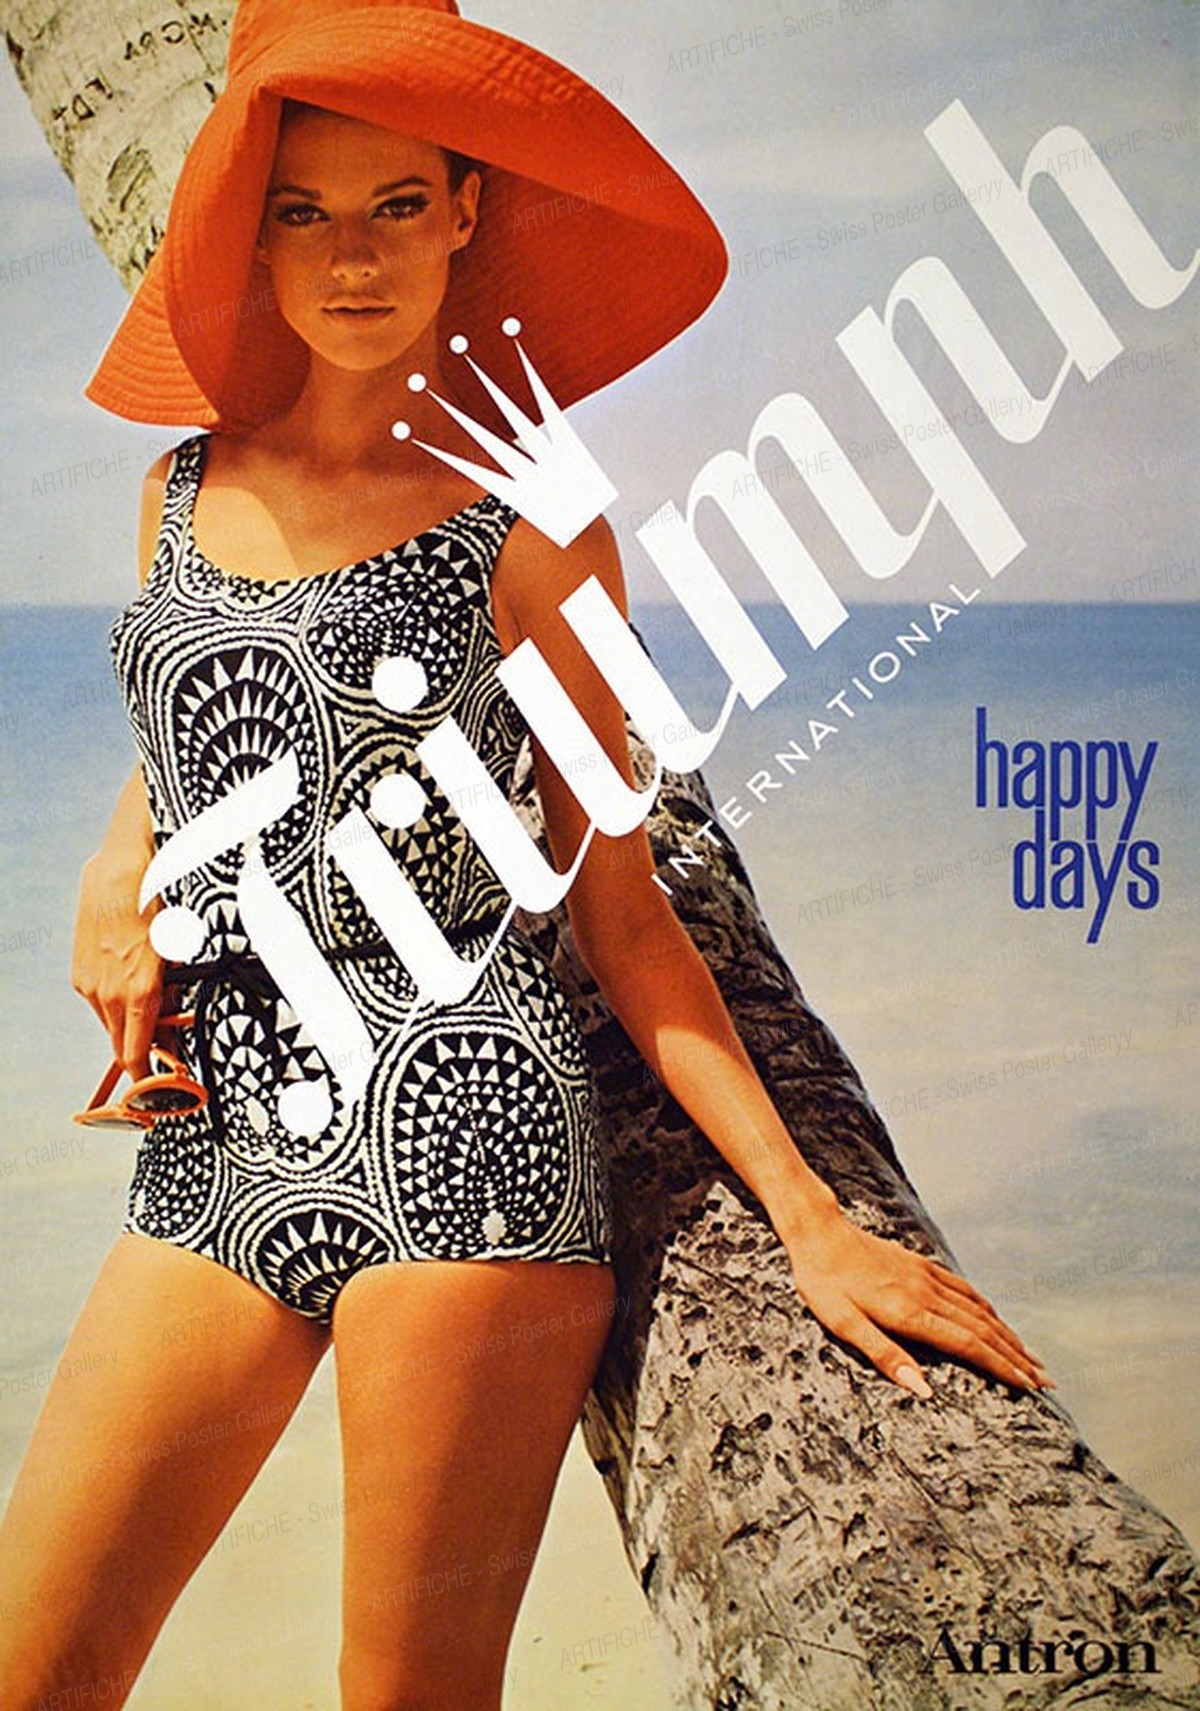 Triumph – happy days, Gisler & Gisler